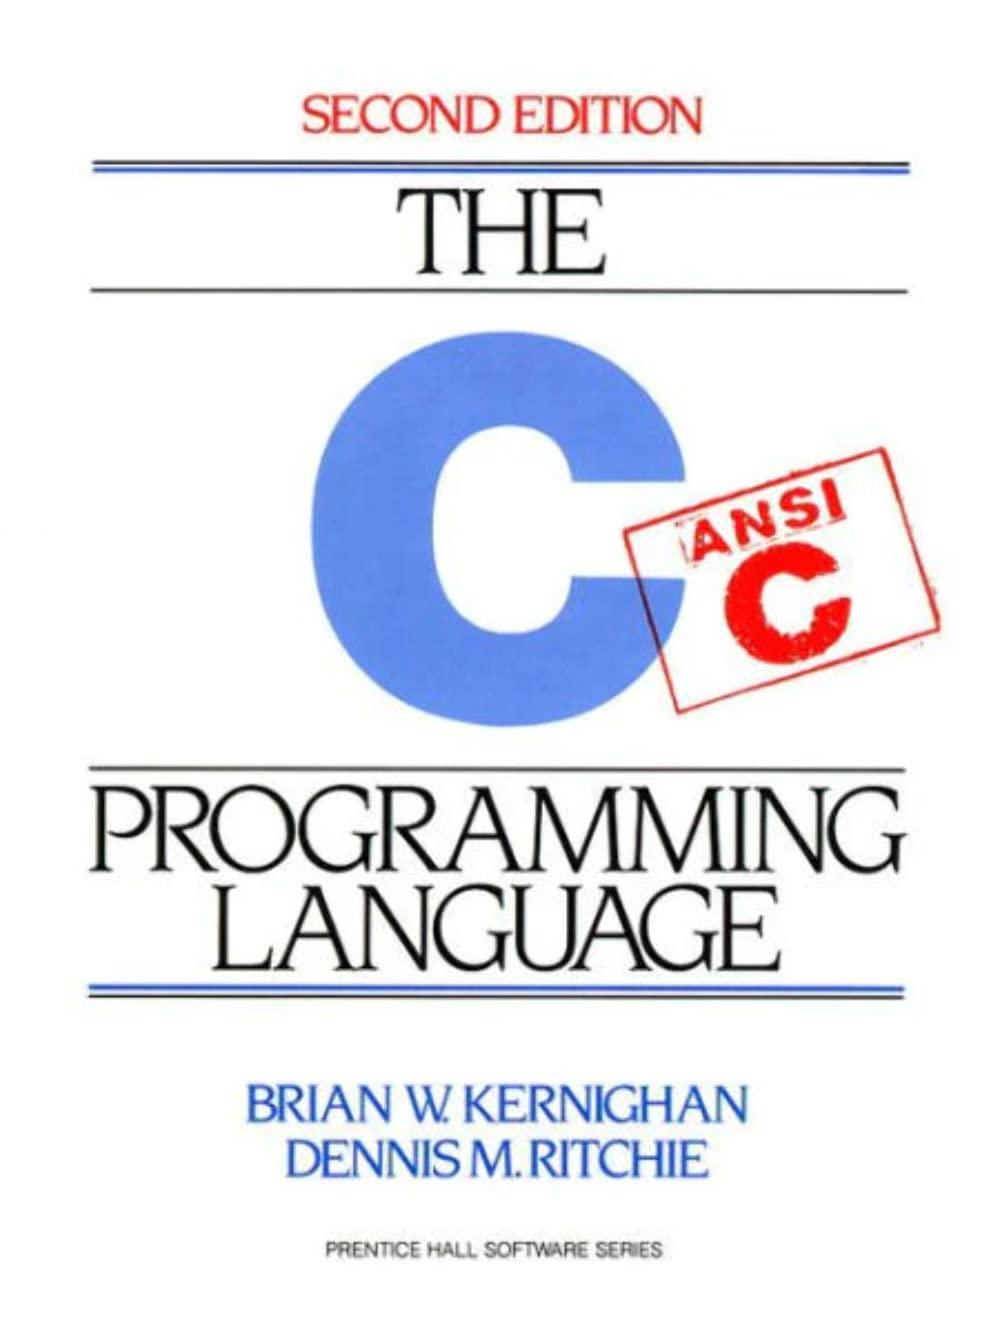 c programming language 2nd edition brian w. kernighan, dennis m. ritchie 9380853238, 978-9380853239